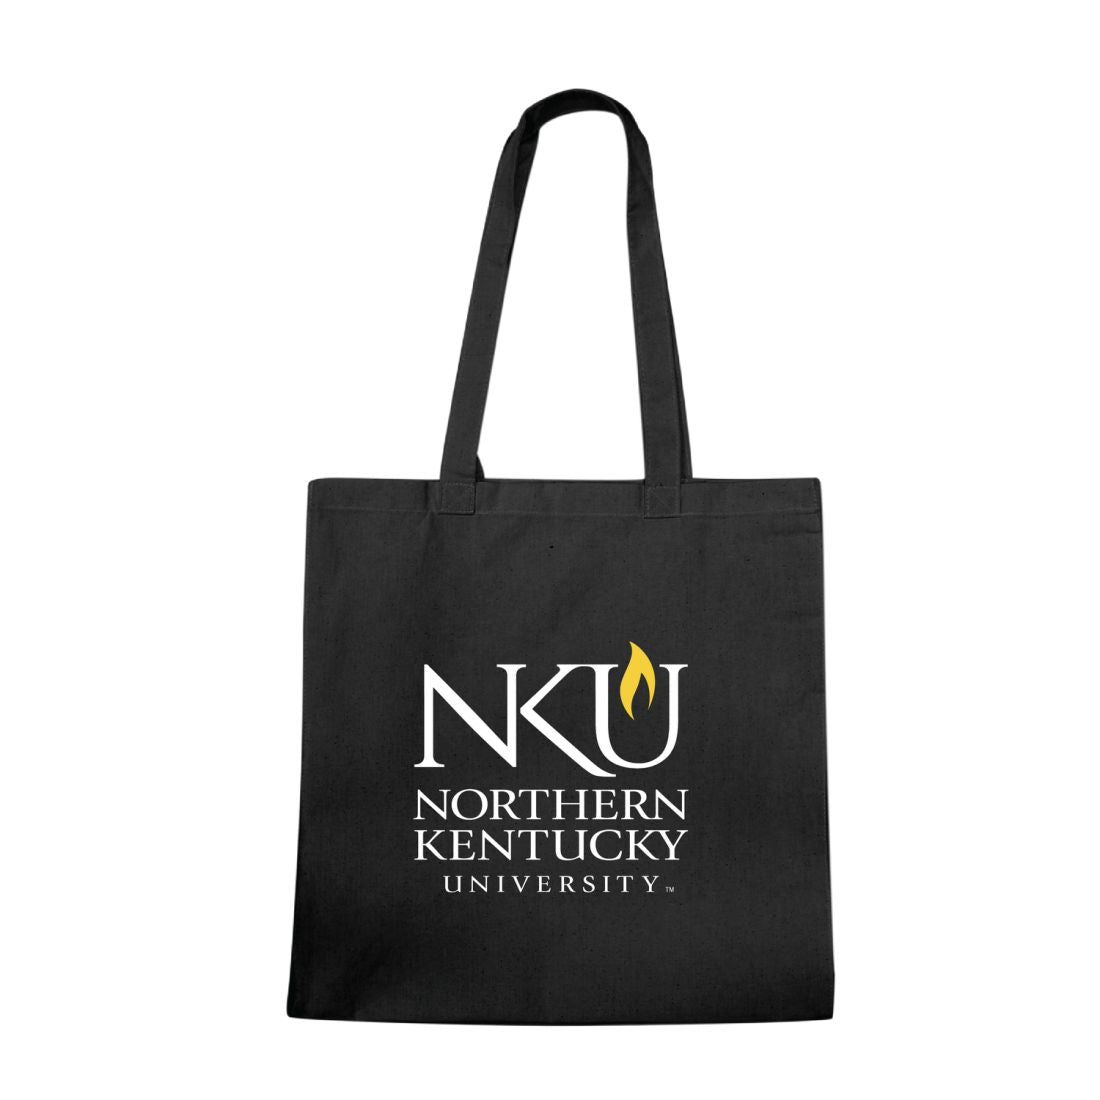 NKU Northern Kentucky University Norse Institutional Tote Bag